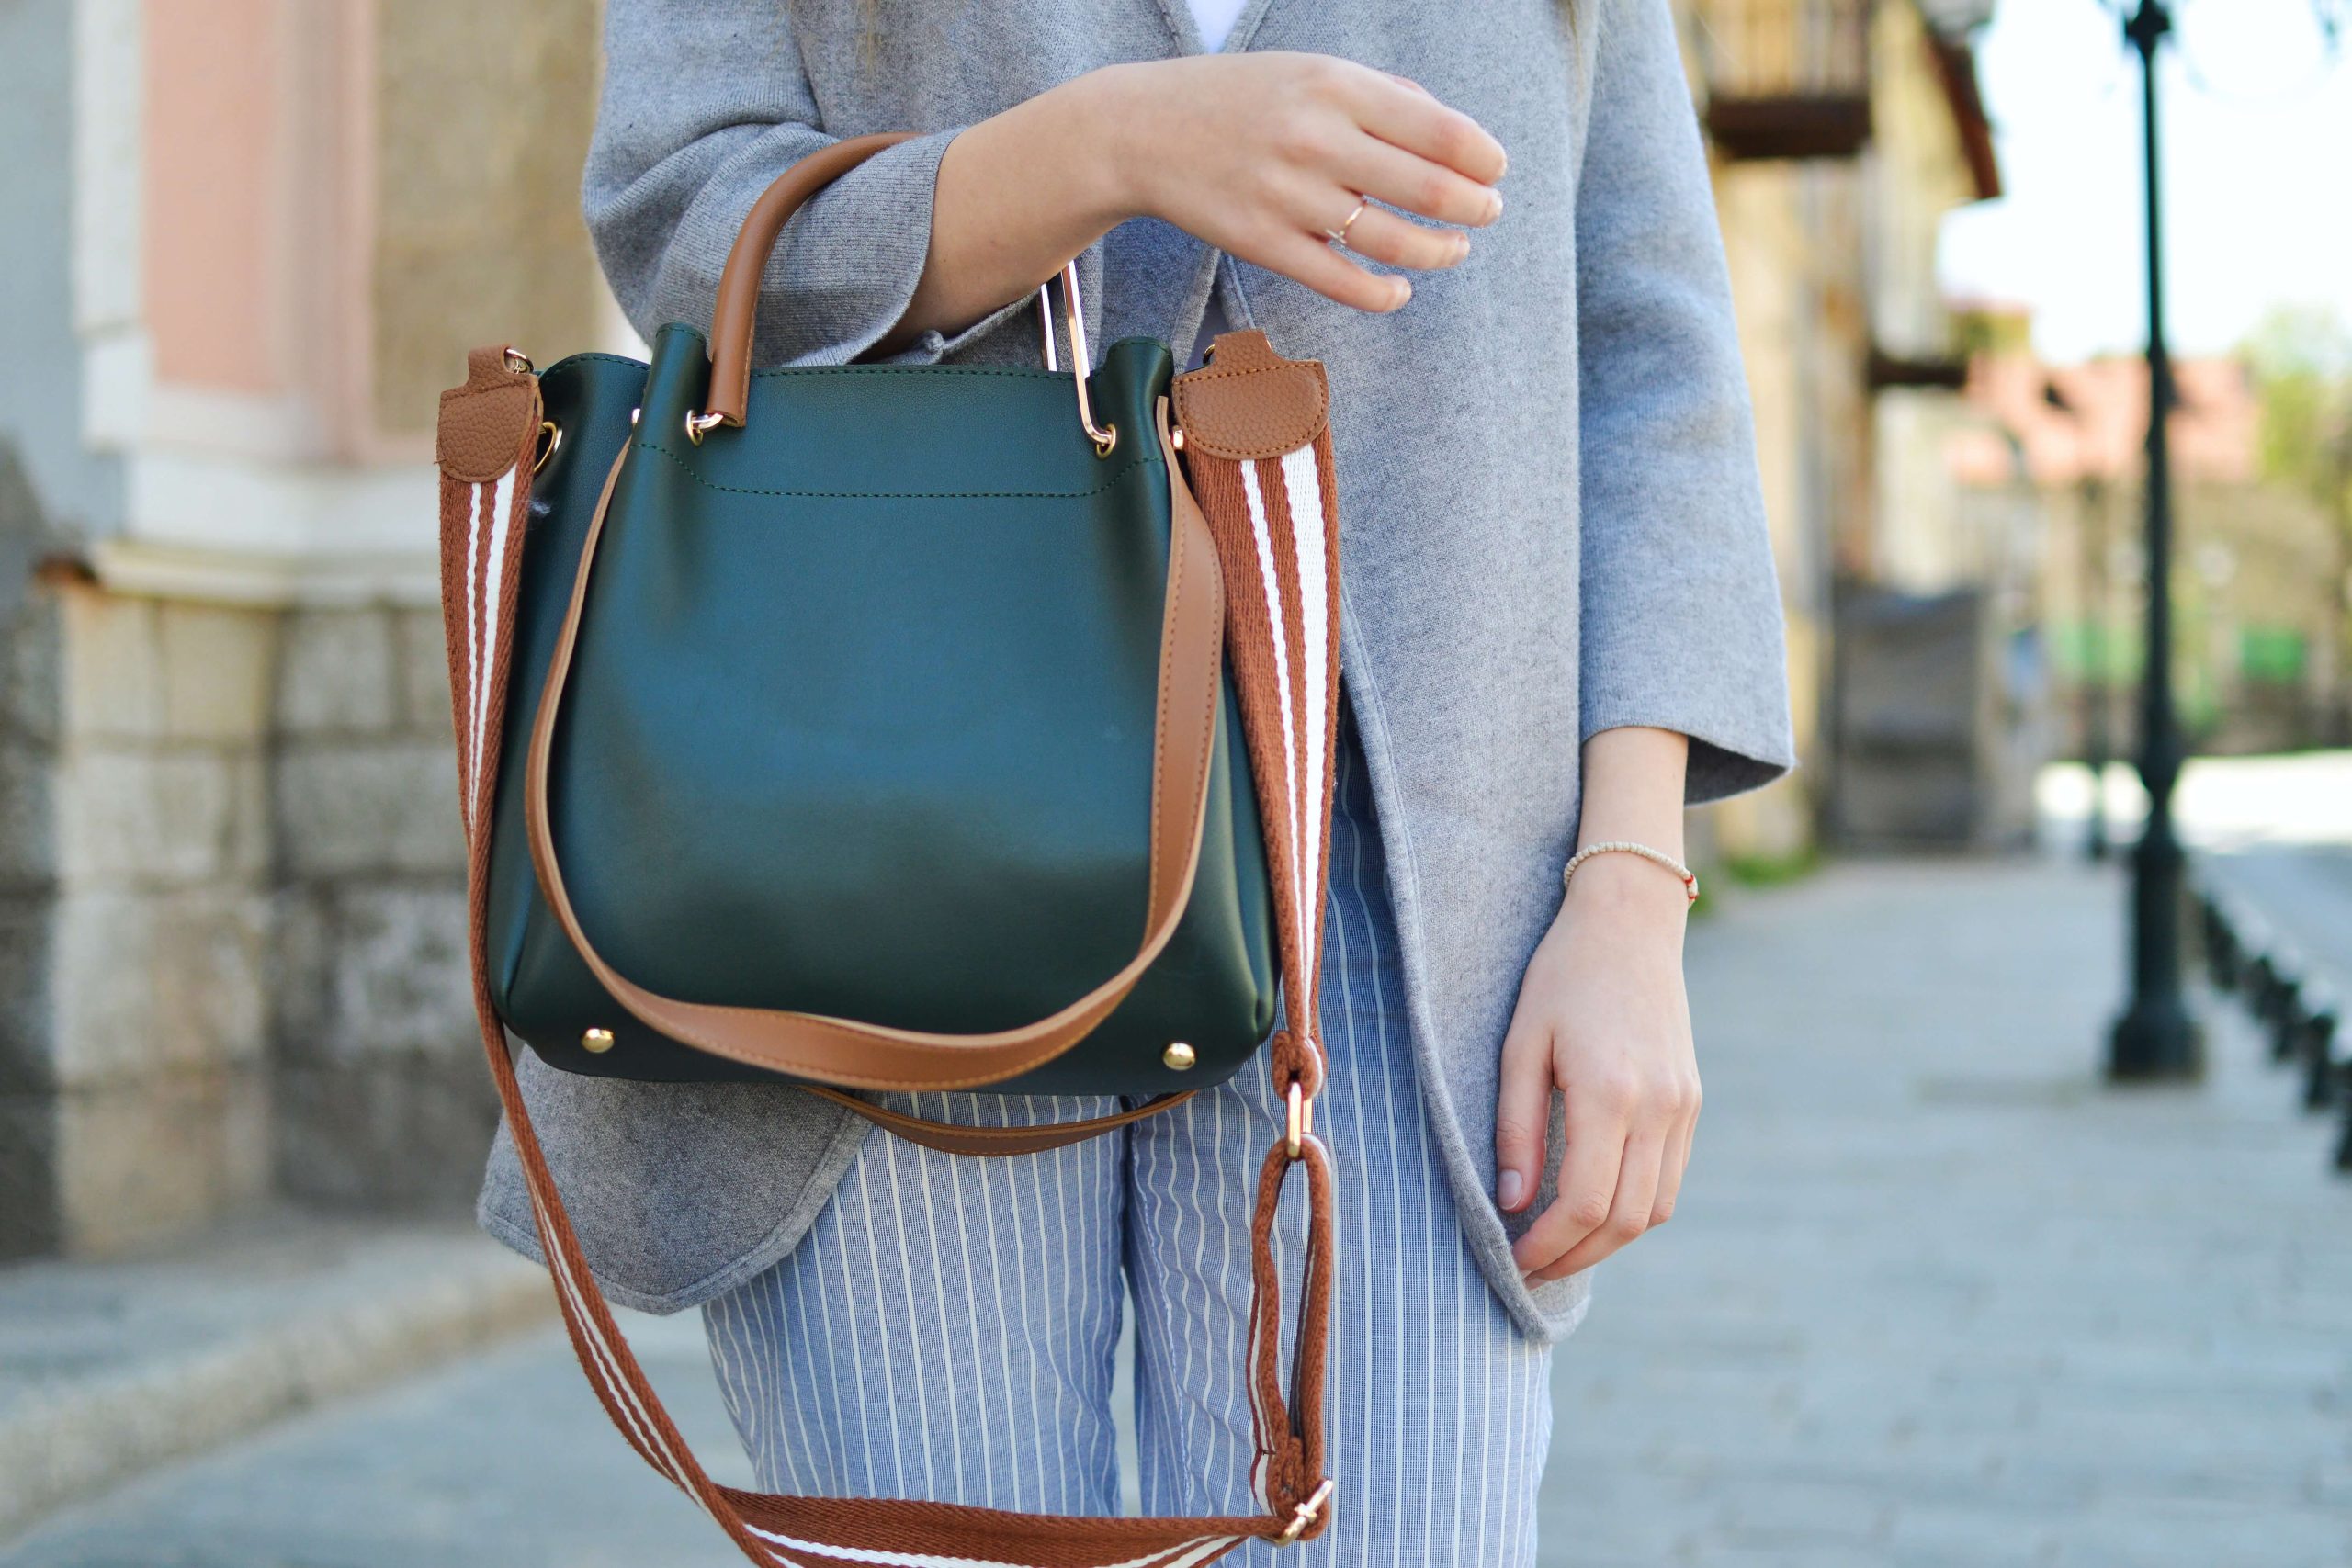 A stylish handbag